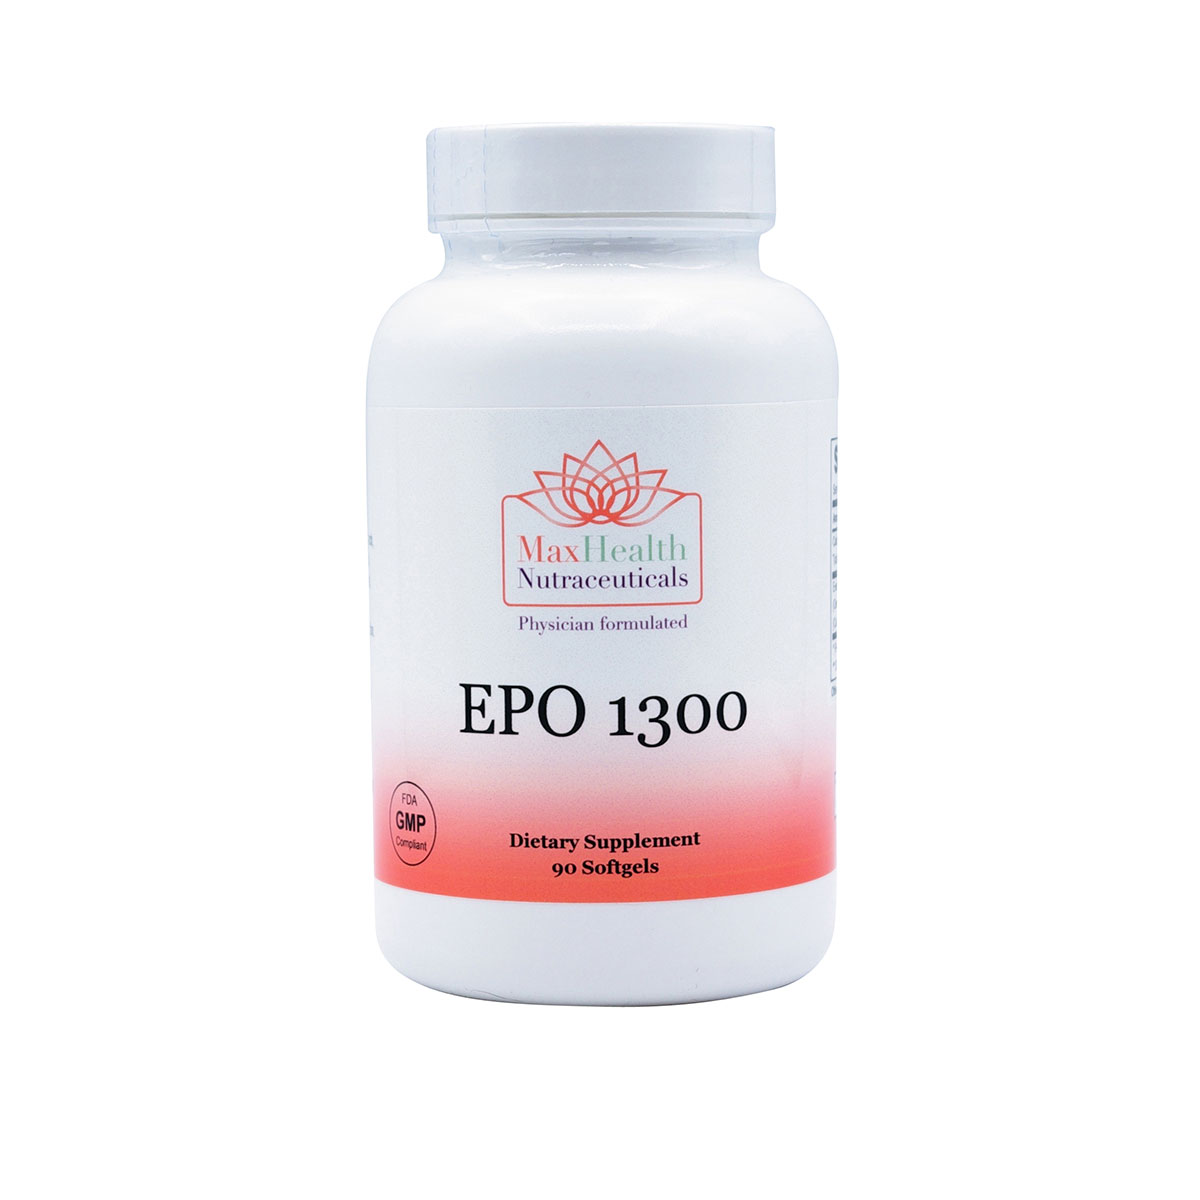 EPO (Evening Primrose Oil)